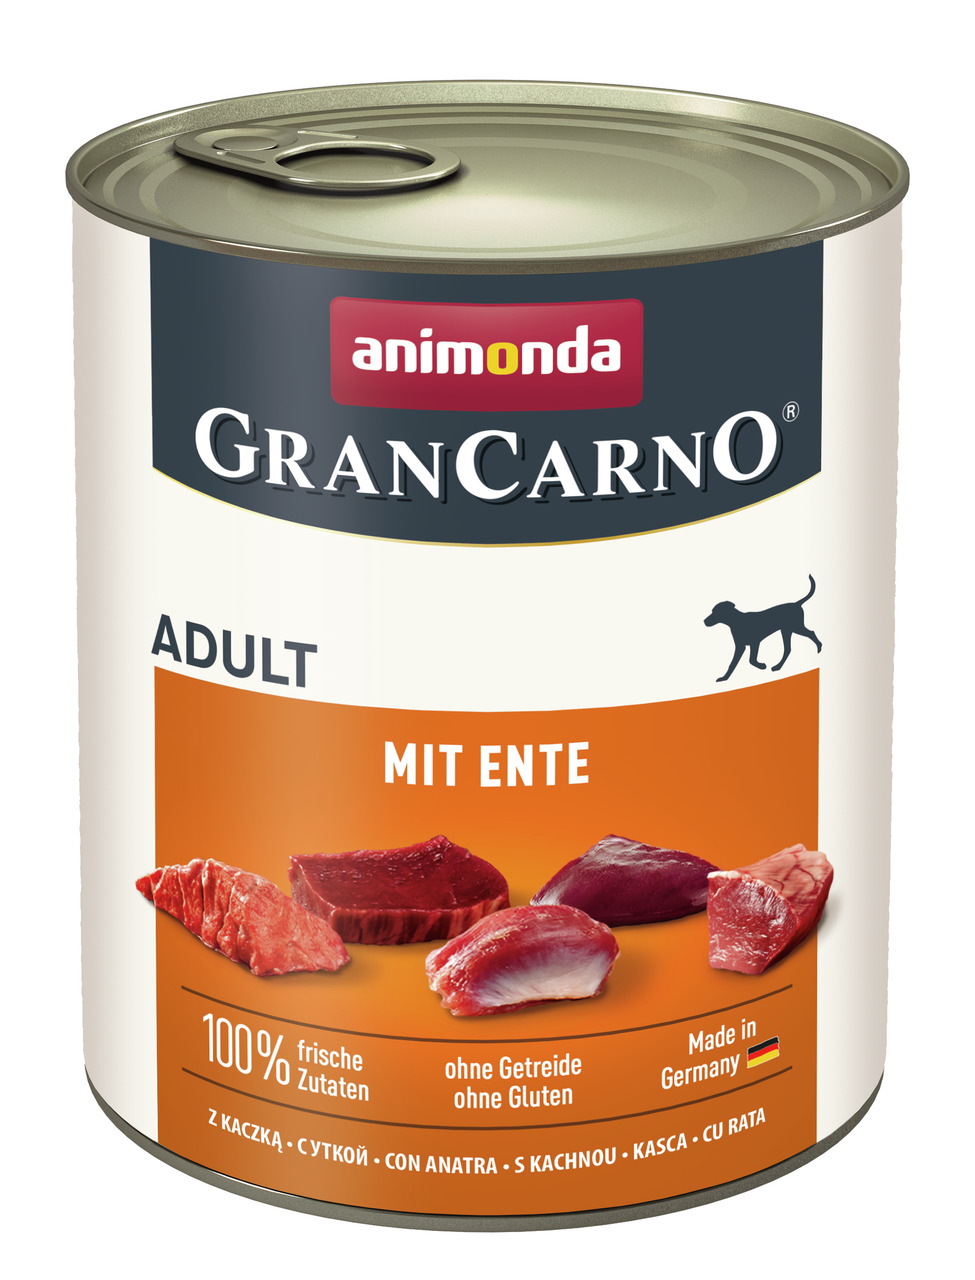 Animonda Gran Carno Adult mit Ente Hunde Nassfutter 800 g